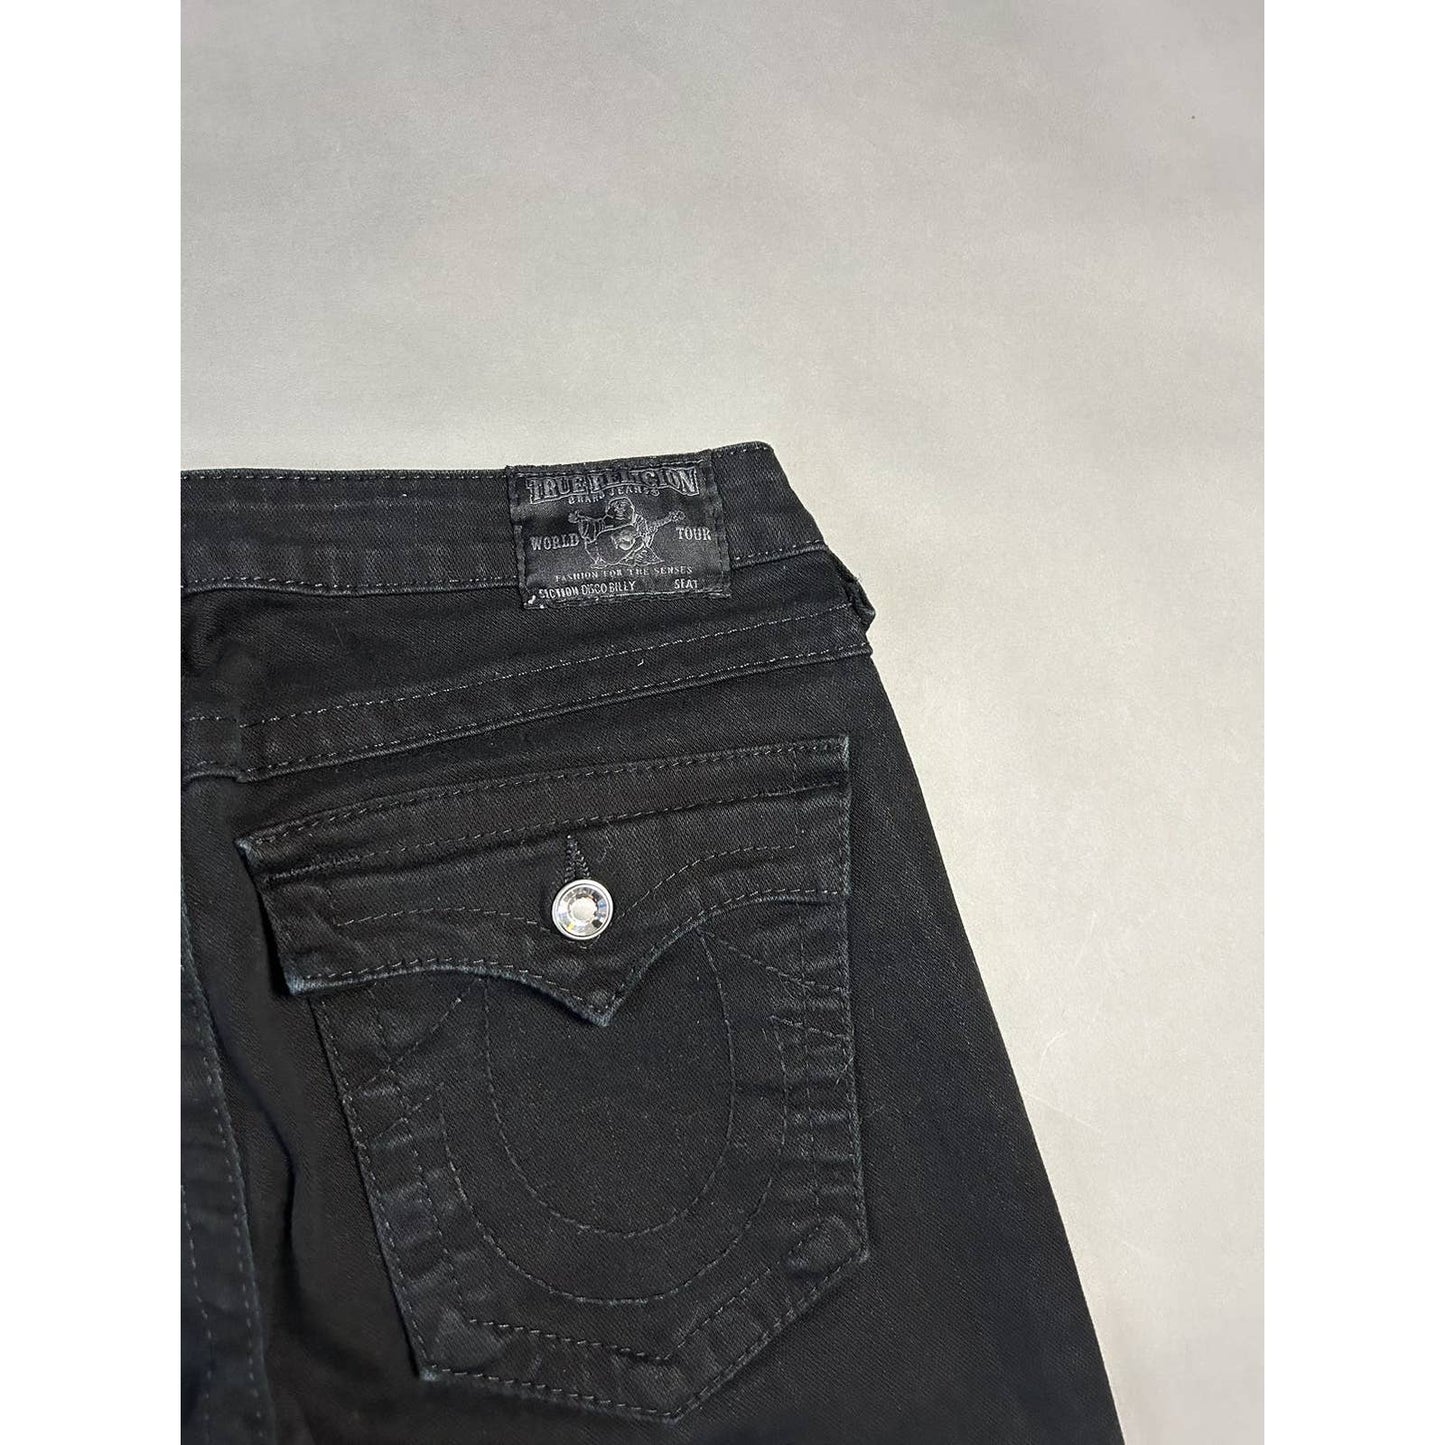 True Religion vintage black jeans denim Swarovski rhinestone